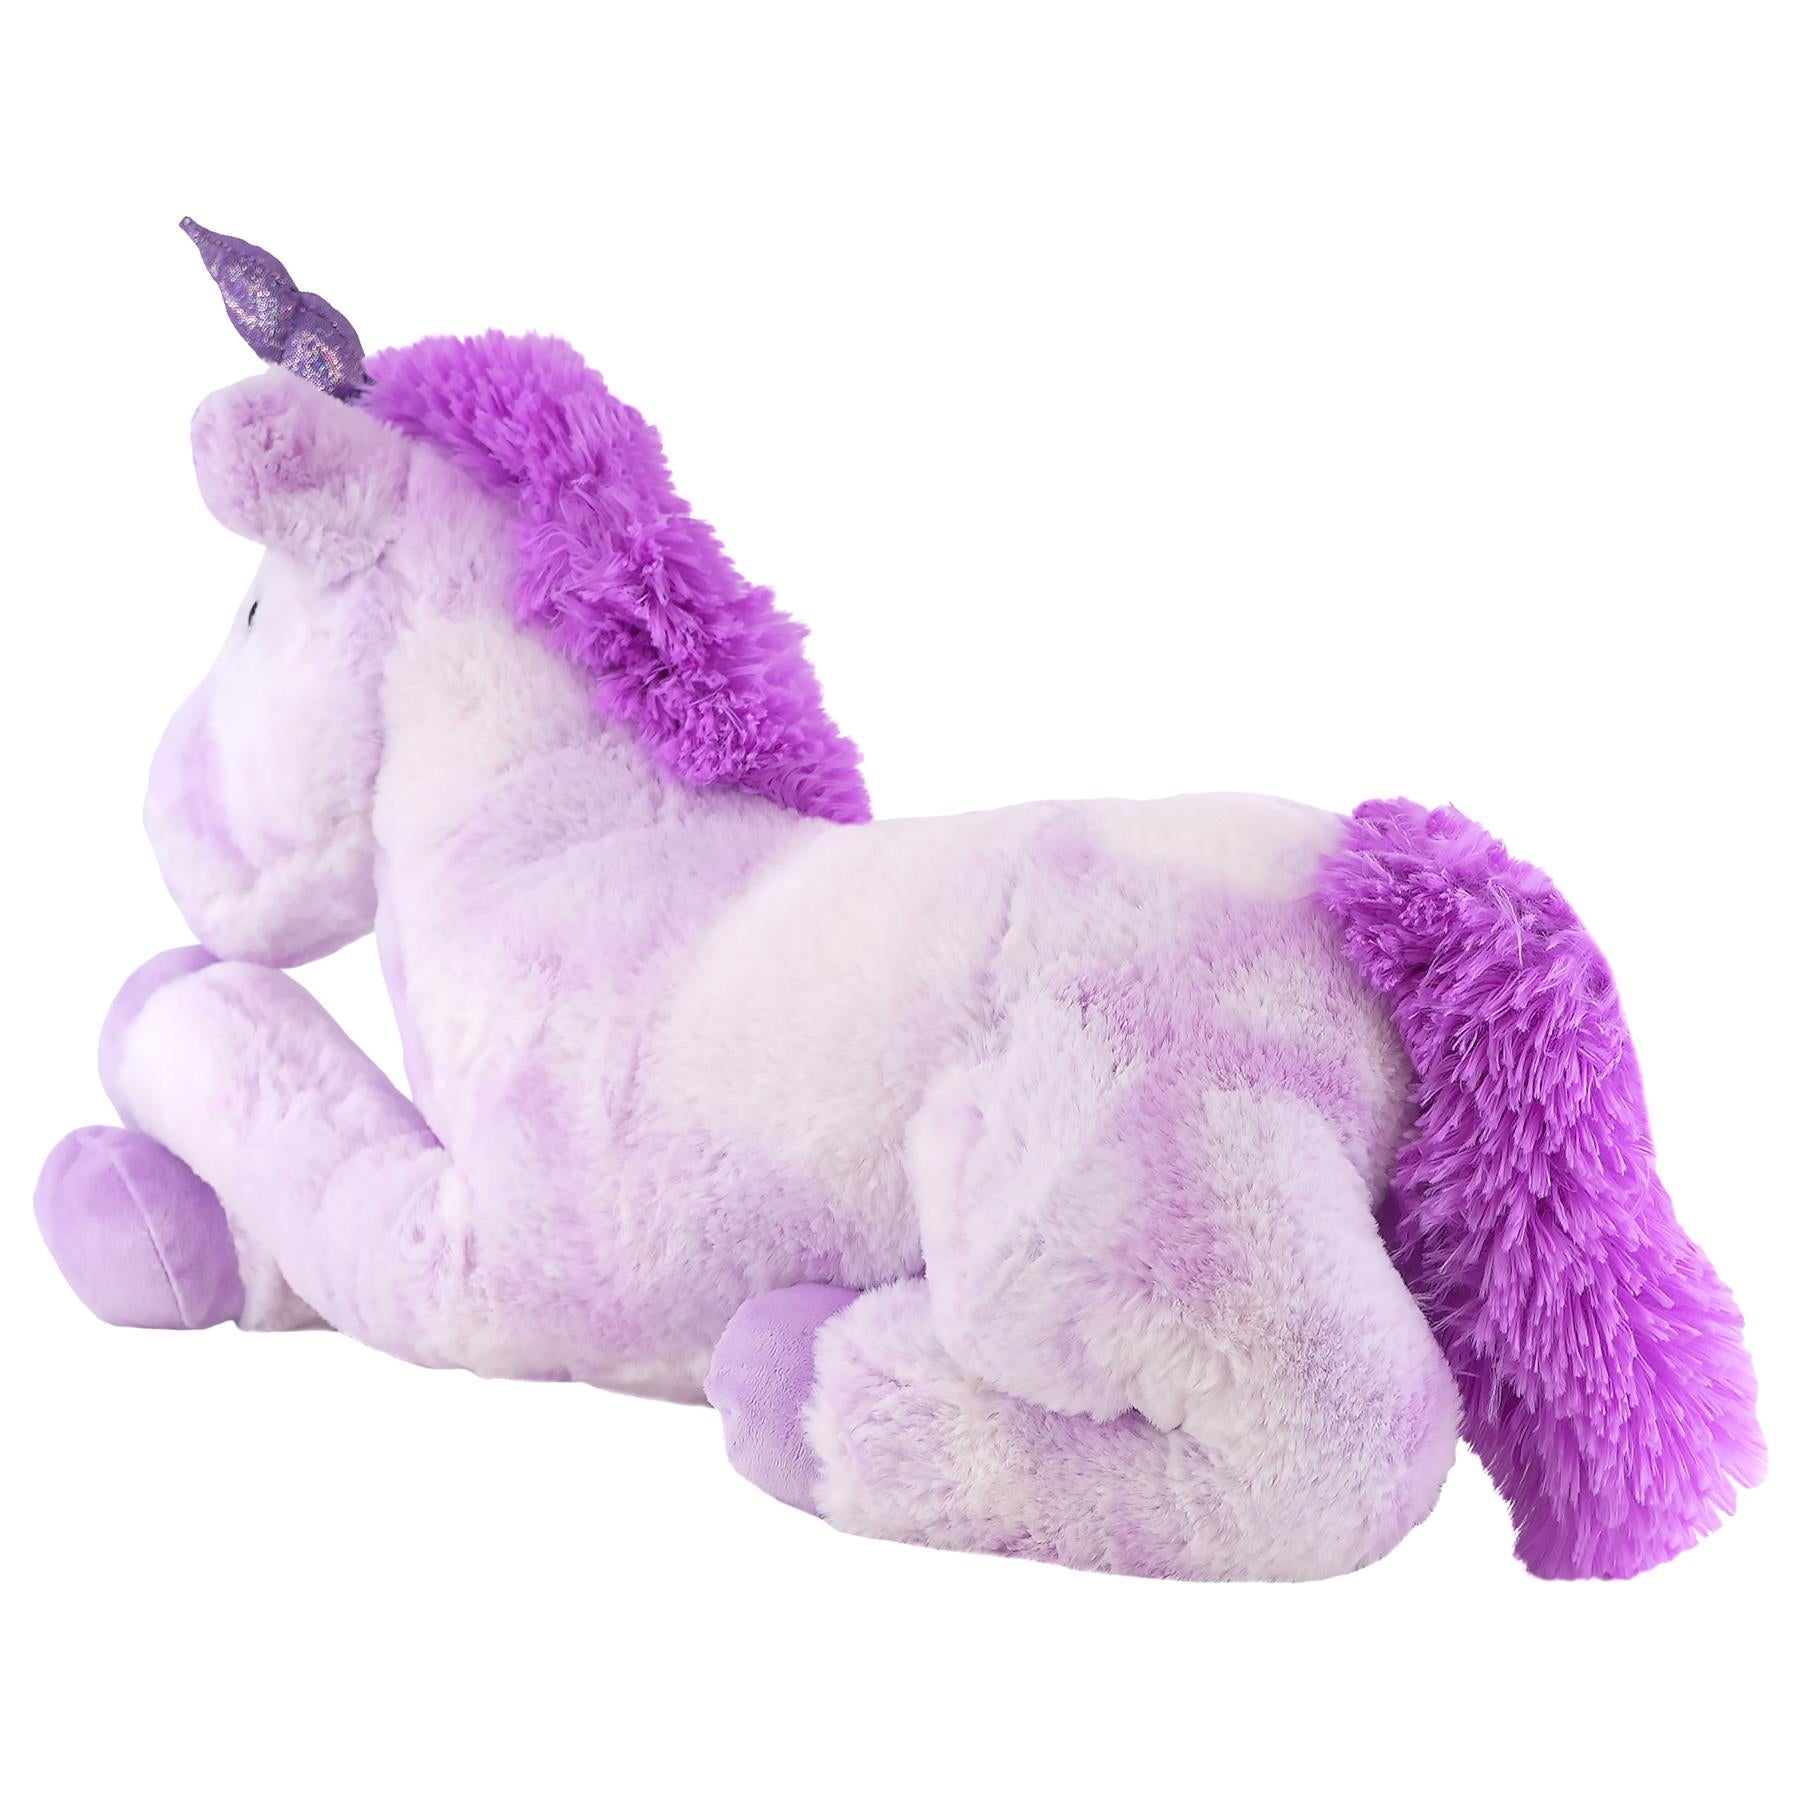 21" Lying Soft Stuffed Unicorn by The Magic Toy Shop - UKBuyZone